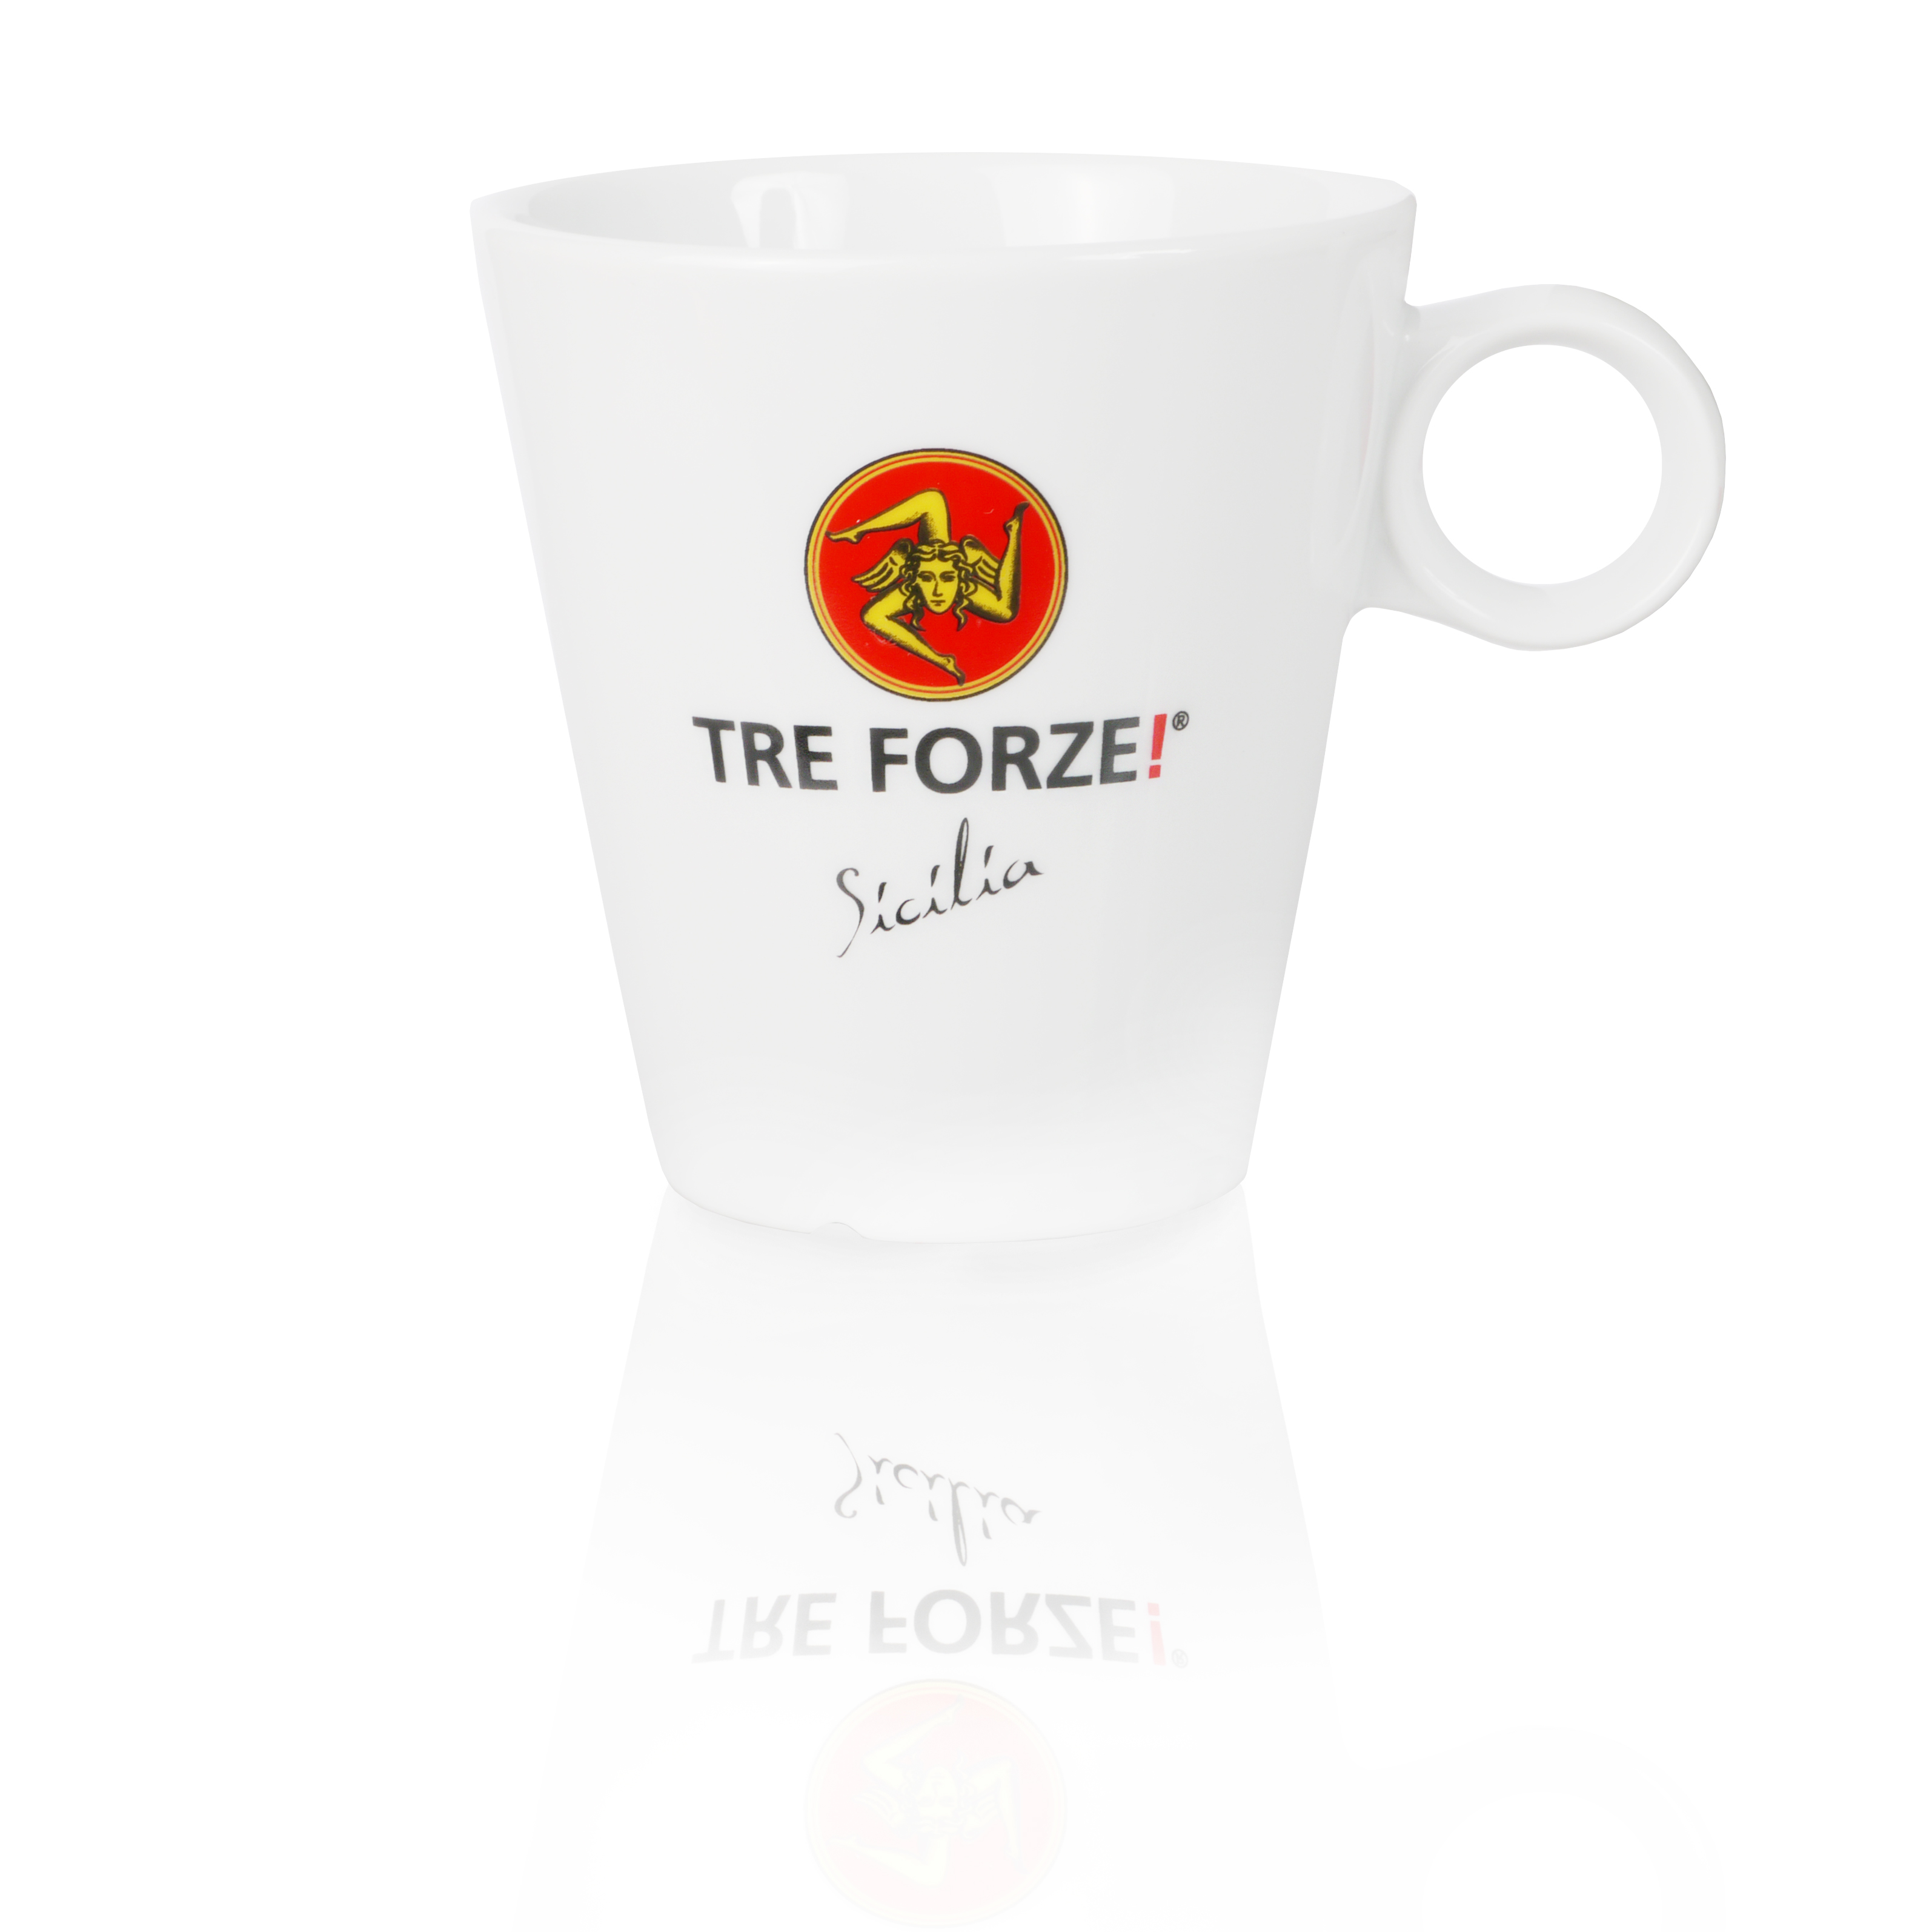 TRE FORZE! Mug / Becher / Tazza